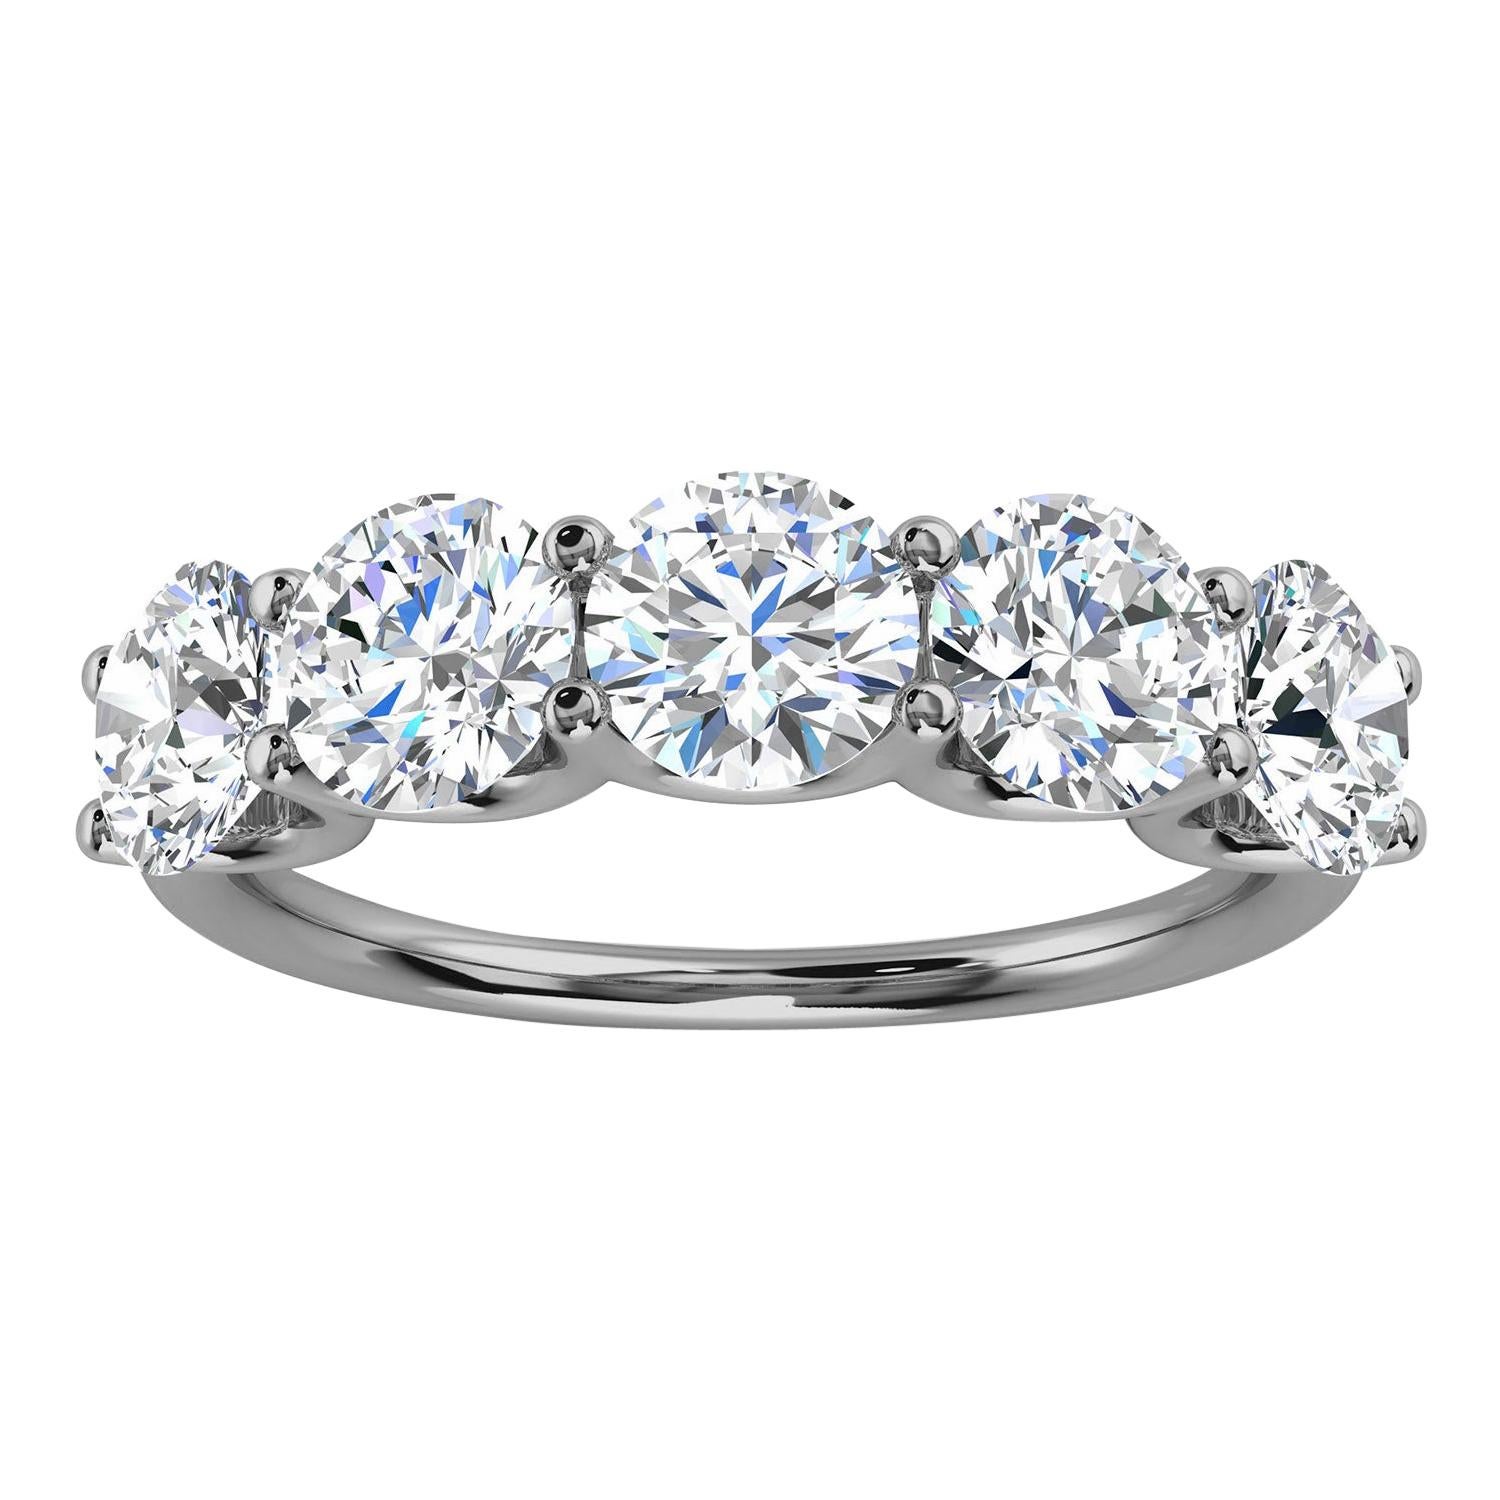 18K White Gold Sevilla Diamond Ring '2.5 Ct. Tw'